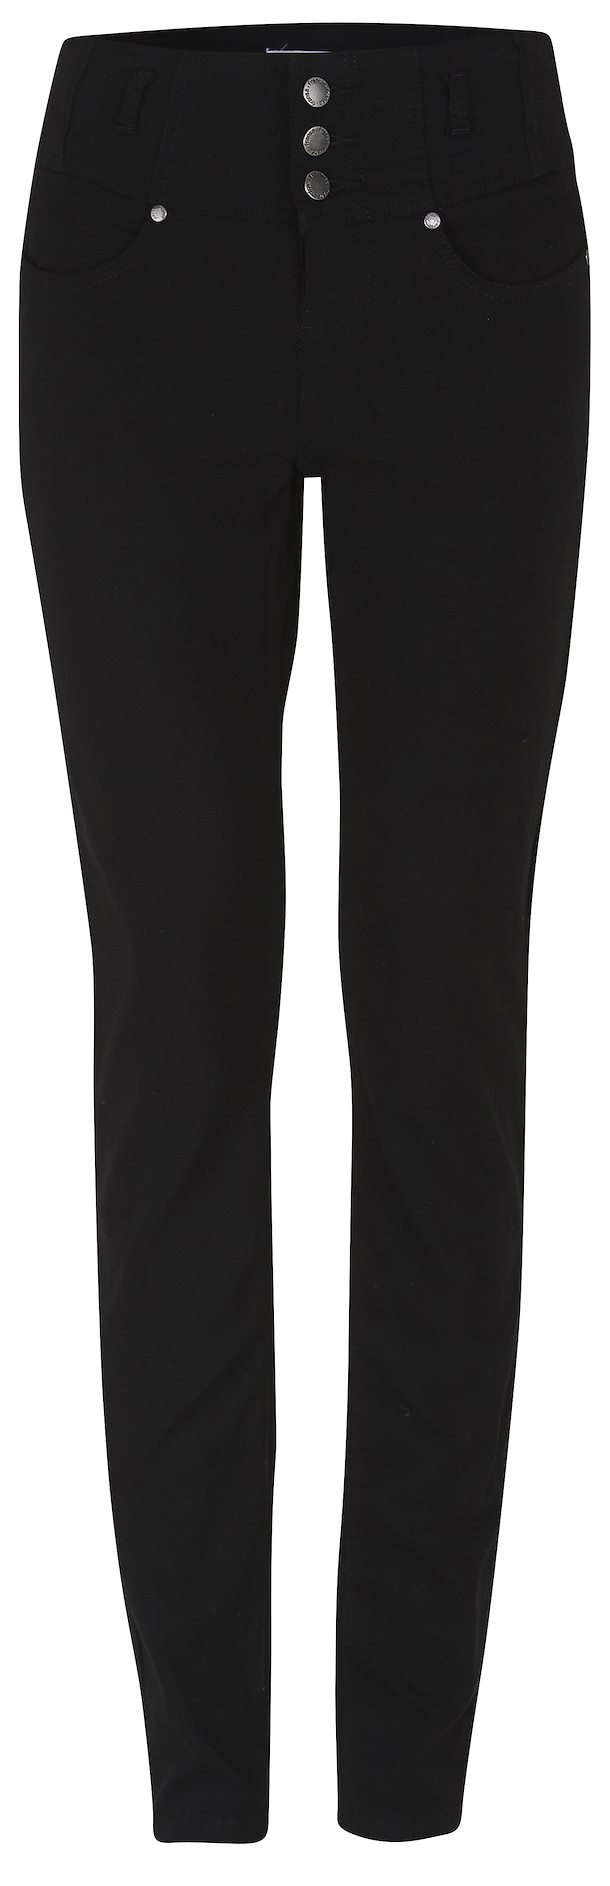 Fransa ZALINFR PANTS (NOOS) Black – Shop (NOOS) Black ZALINFR PANTS from  size 32-46 here